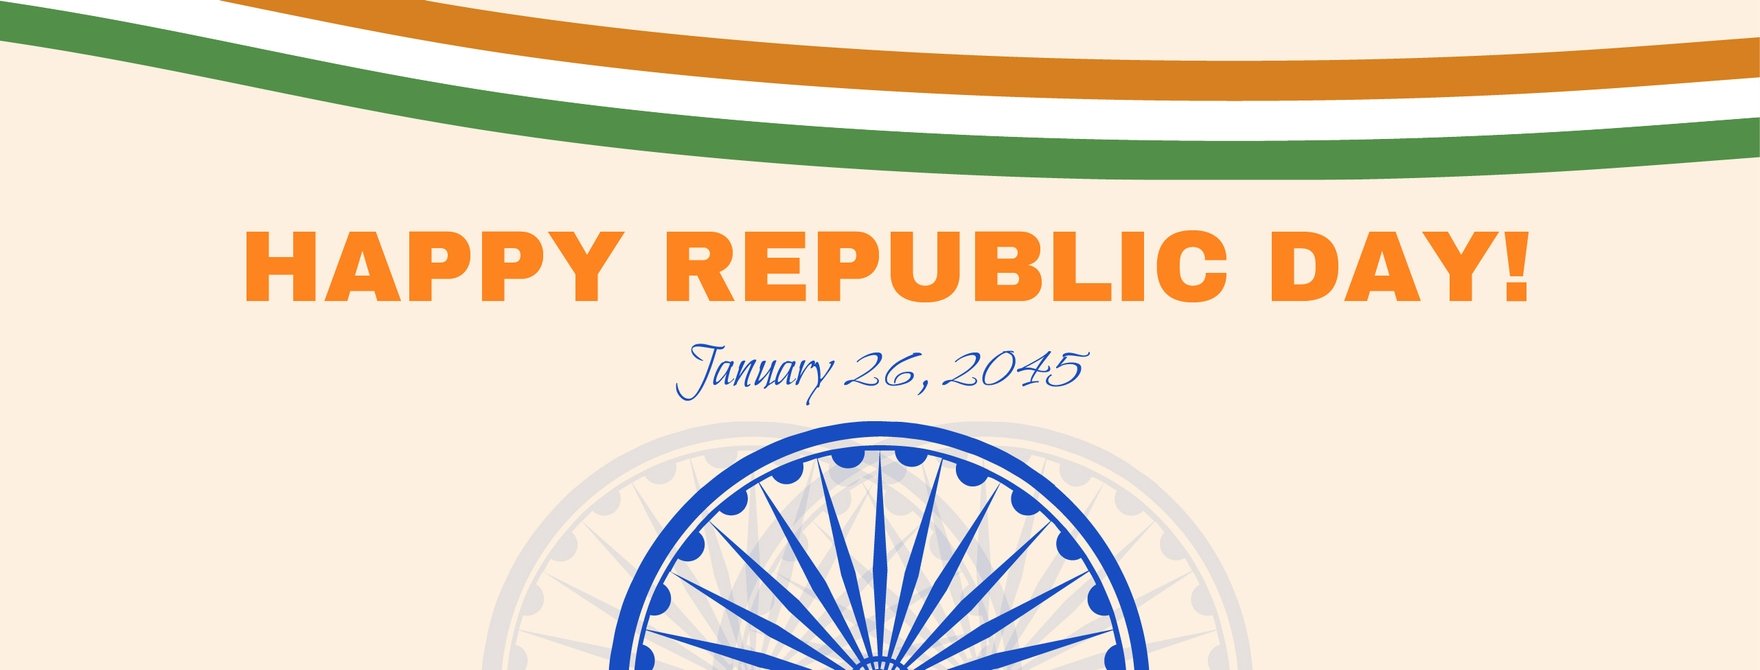 Republic Day Facebook Cover Banner